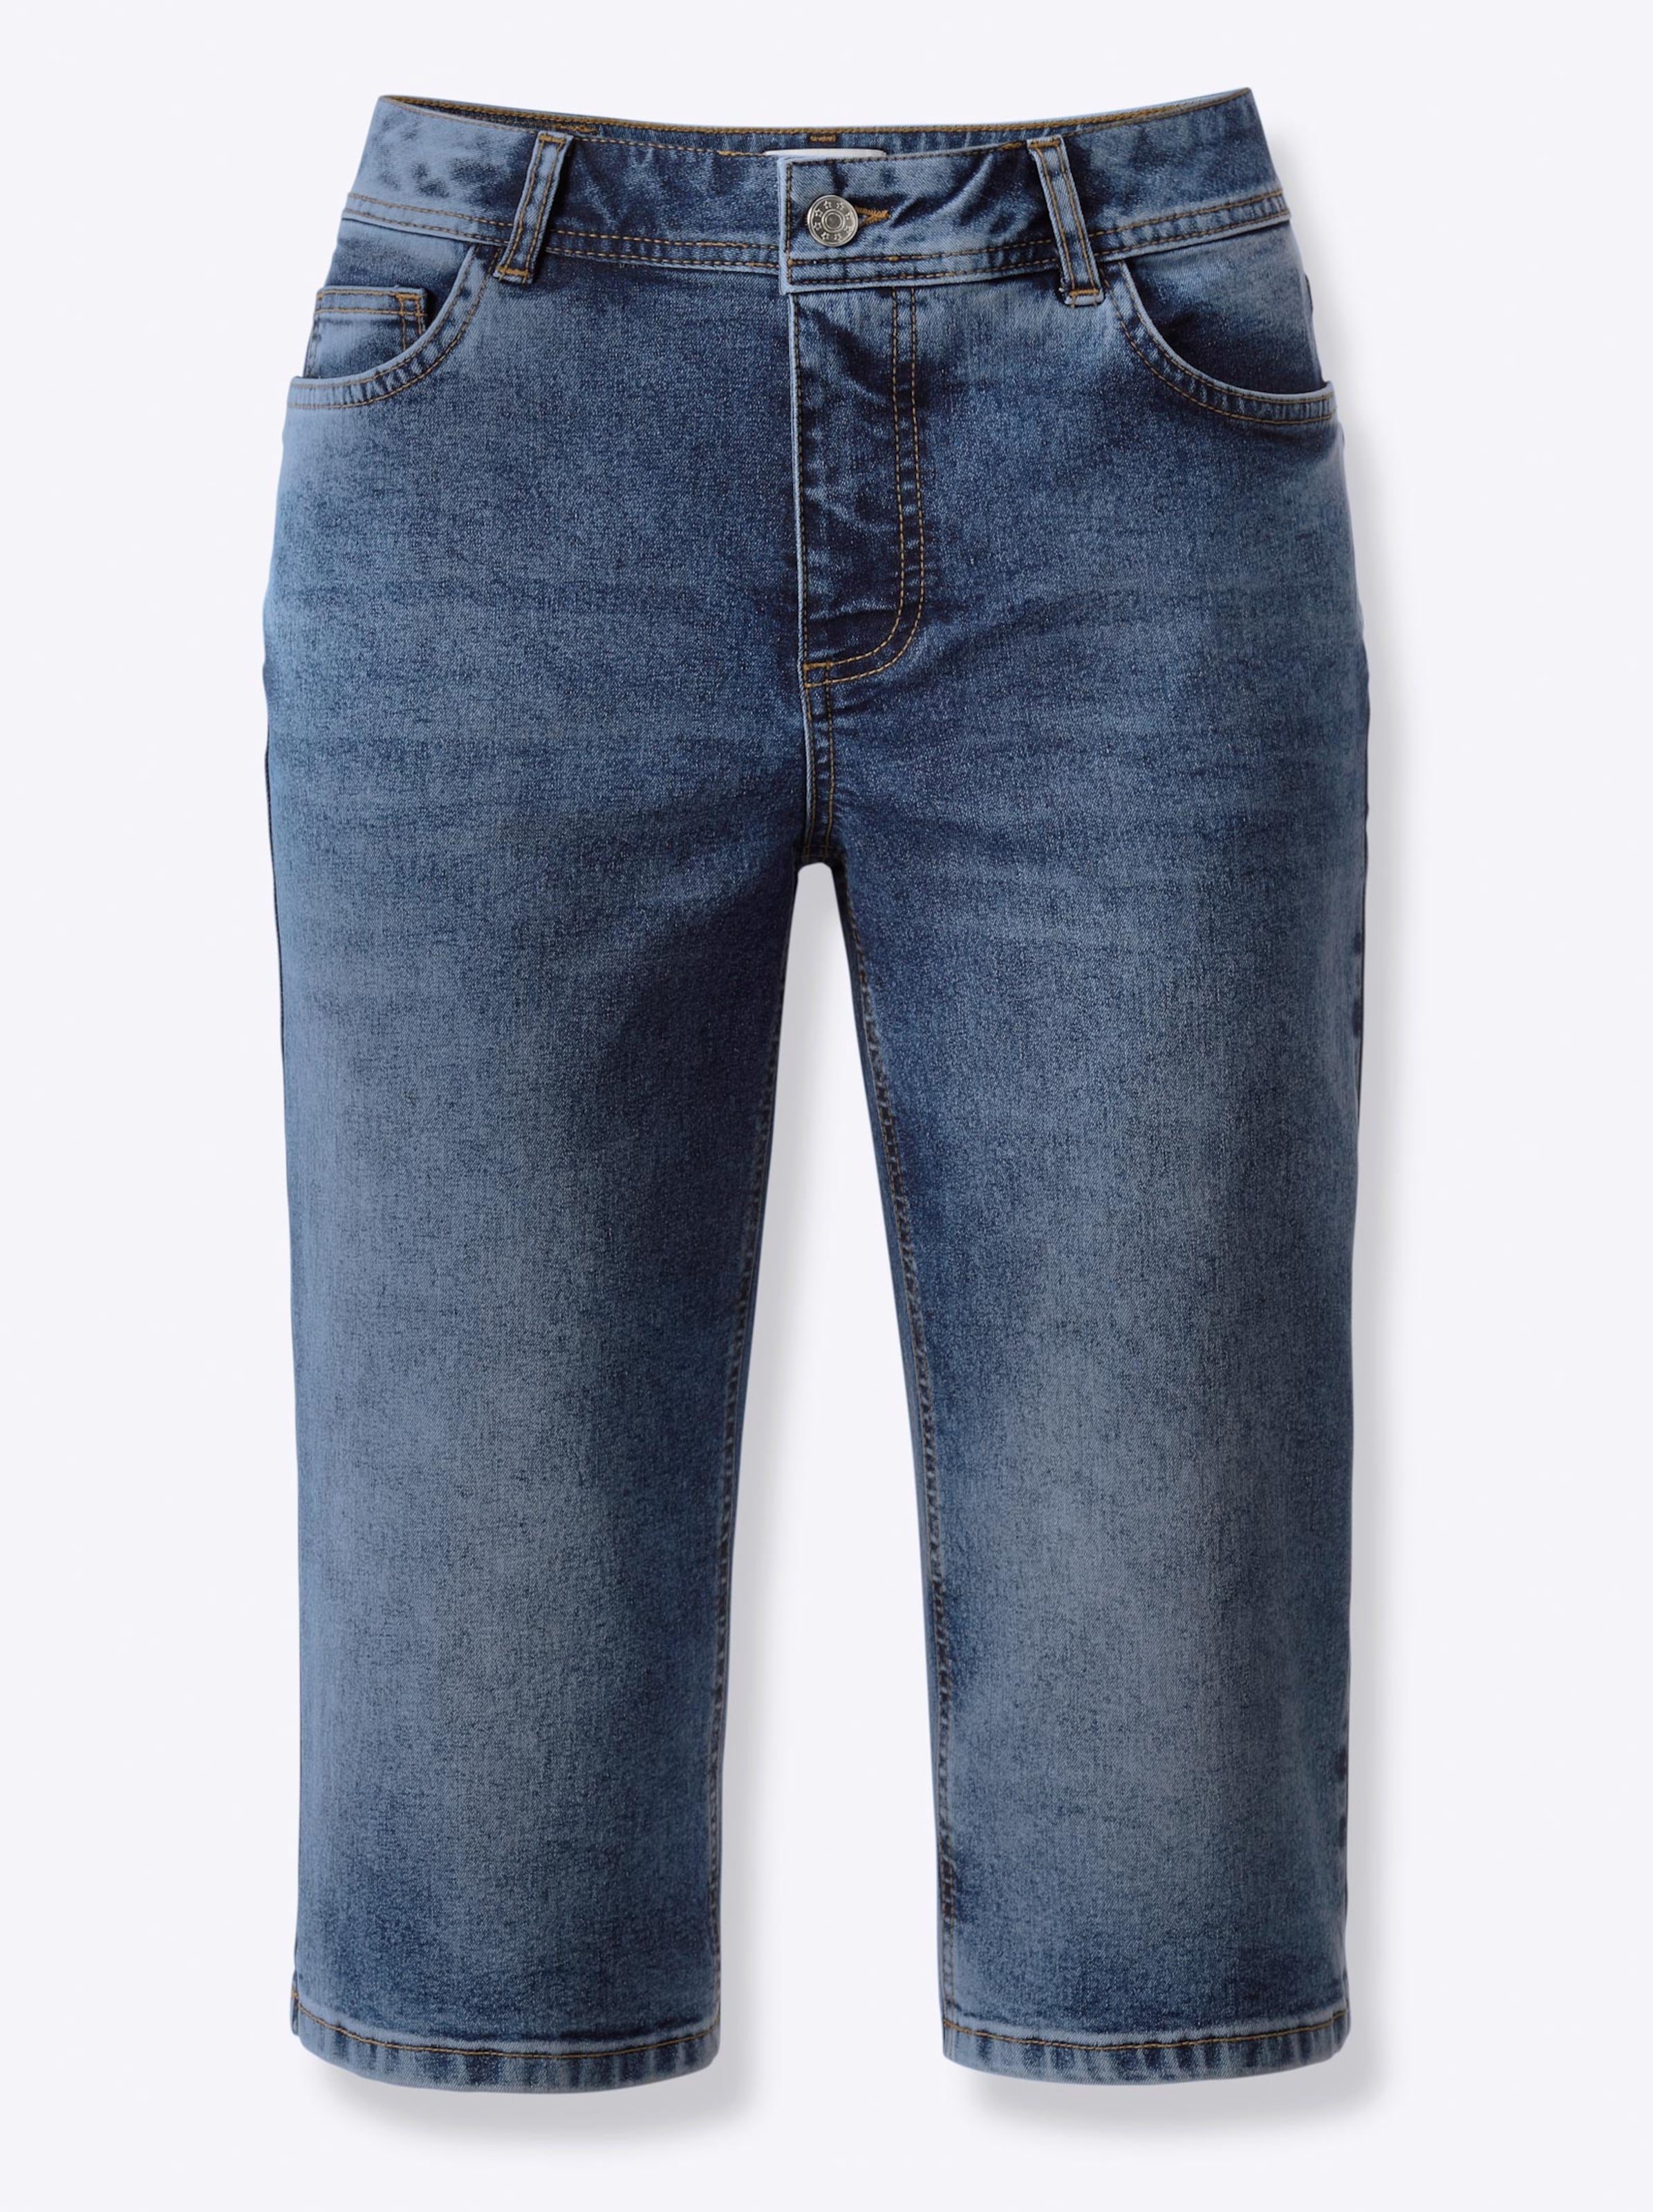 Damenmode Jeans Jeansbermudas in blue-stone-washed 